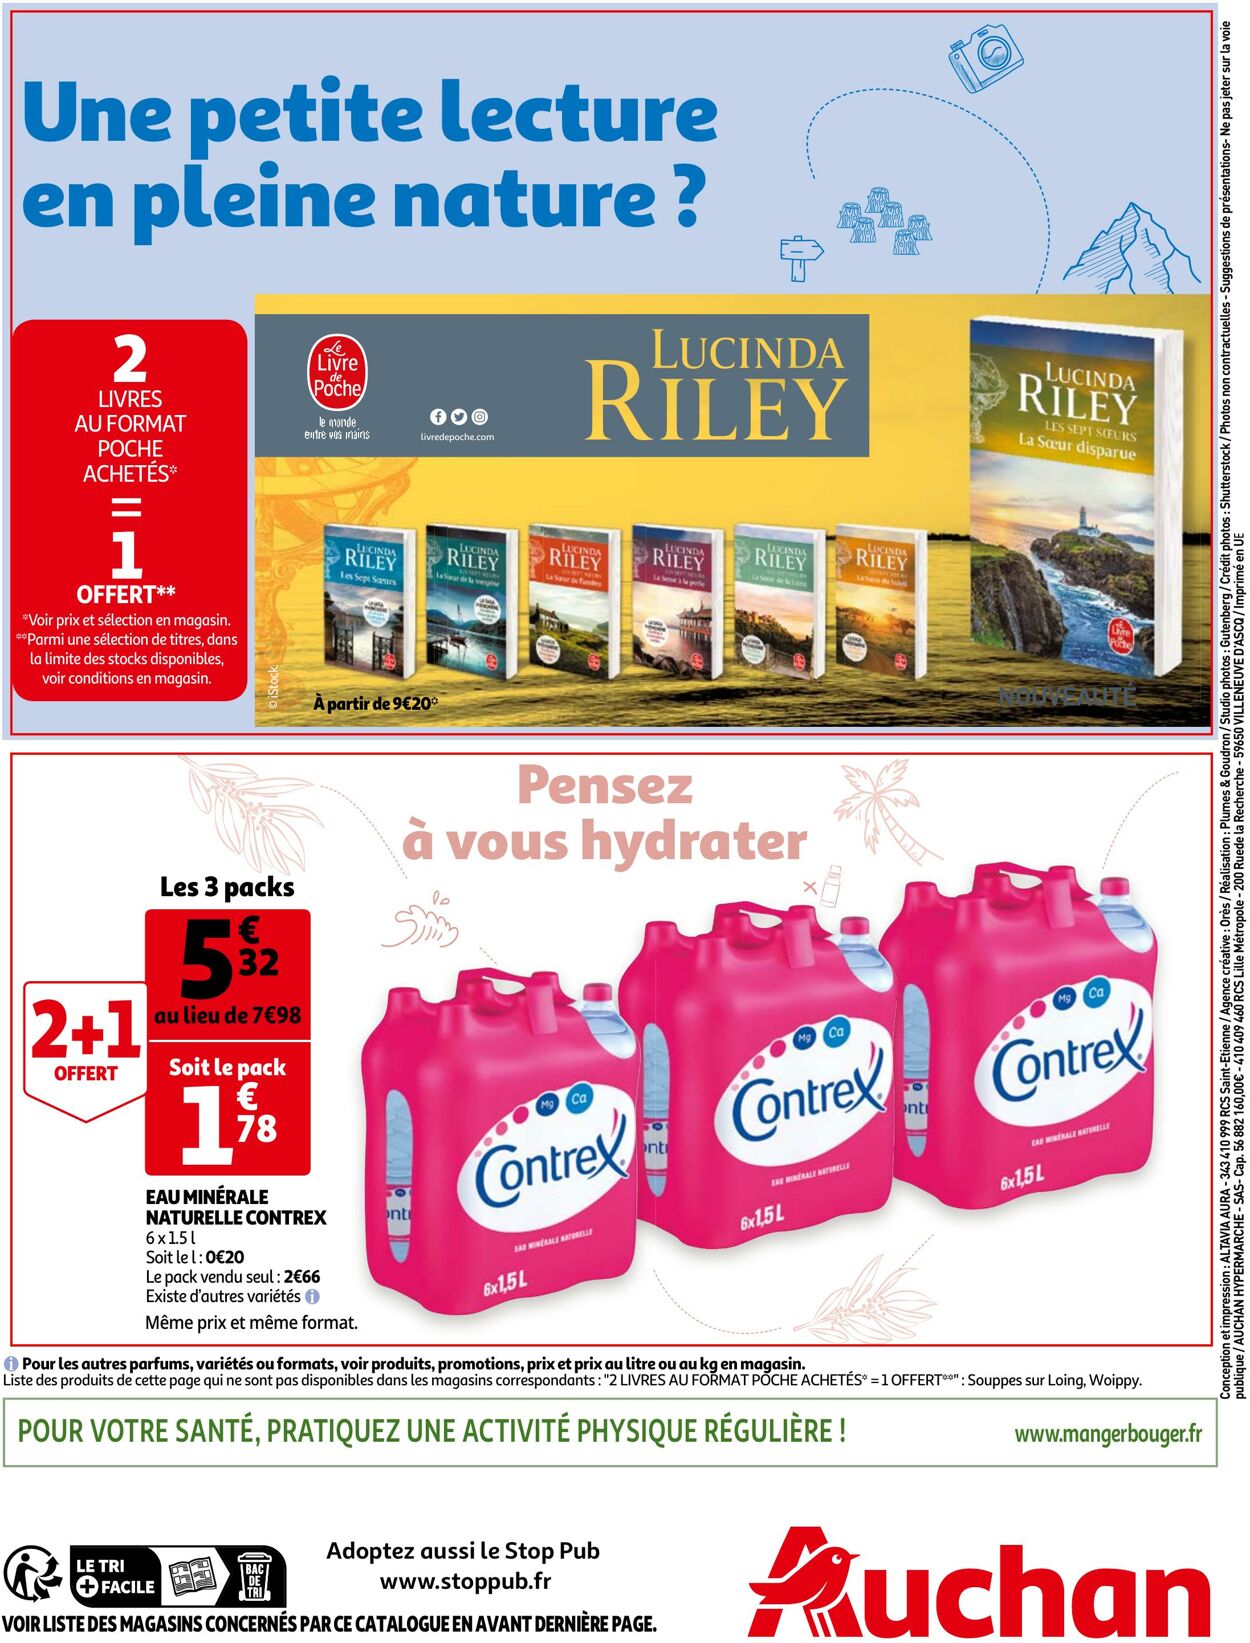 Catalogue Auchan 22.06.2022 - 05.07.2022